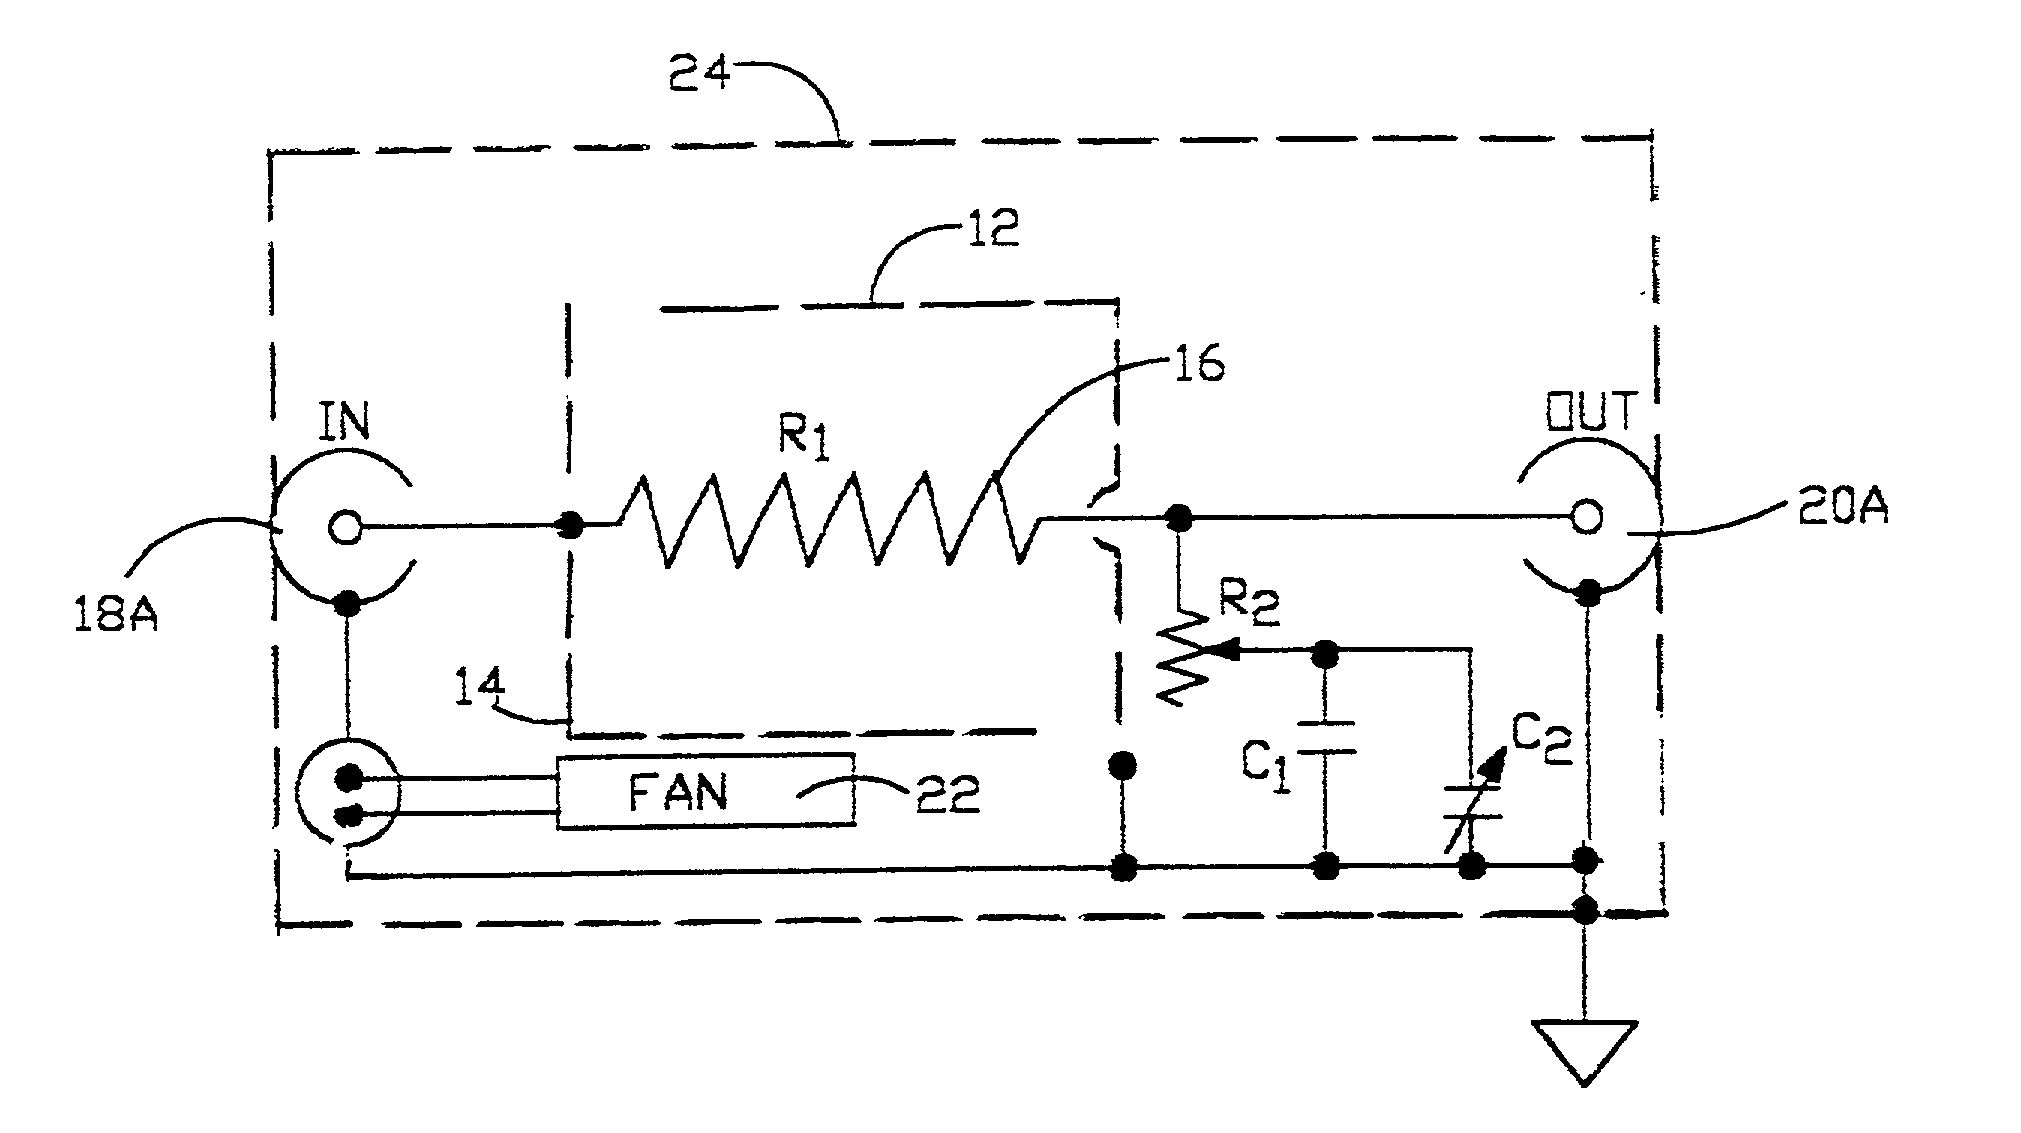 Range resistors for AC-DC transfer measurements